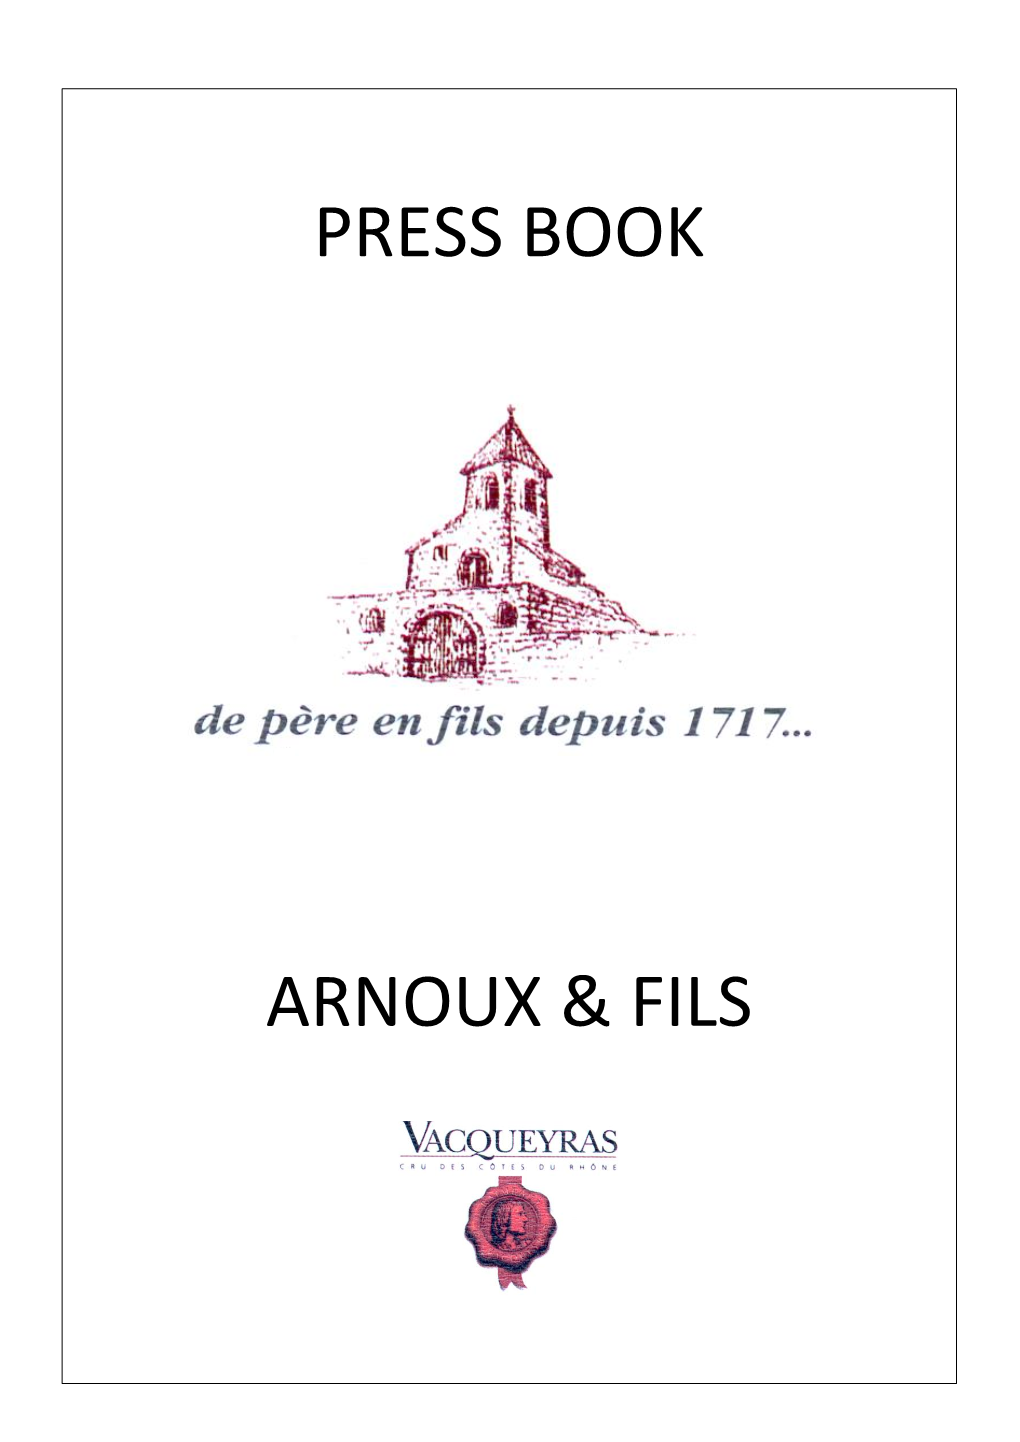 Press Book Arnoux & Fils